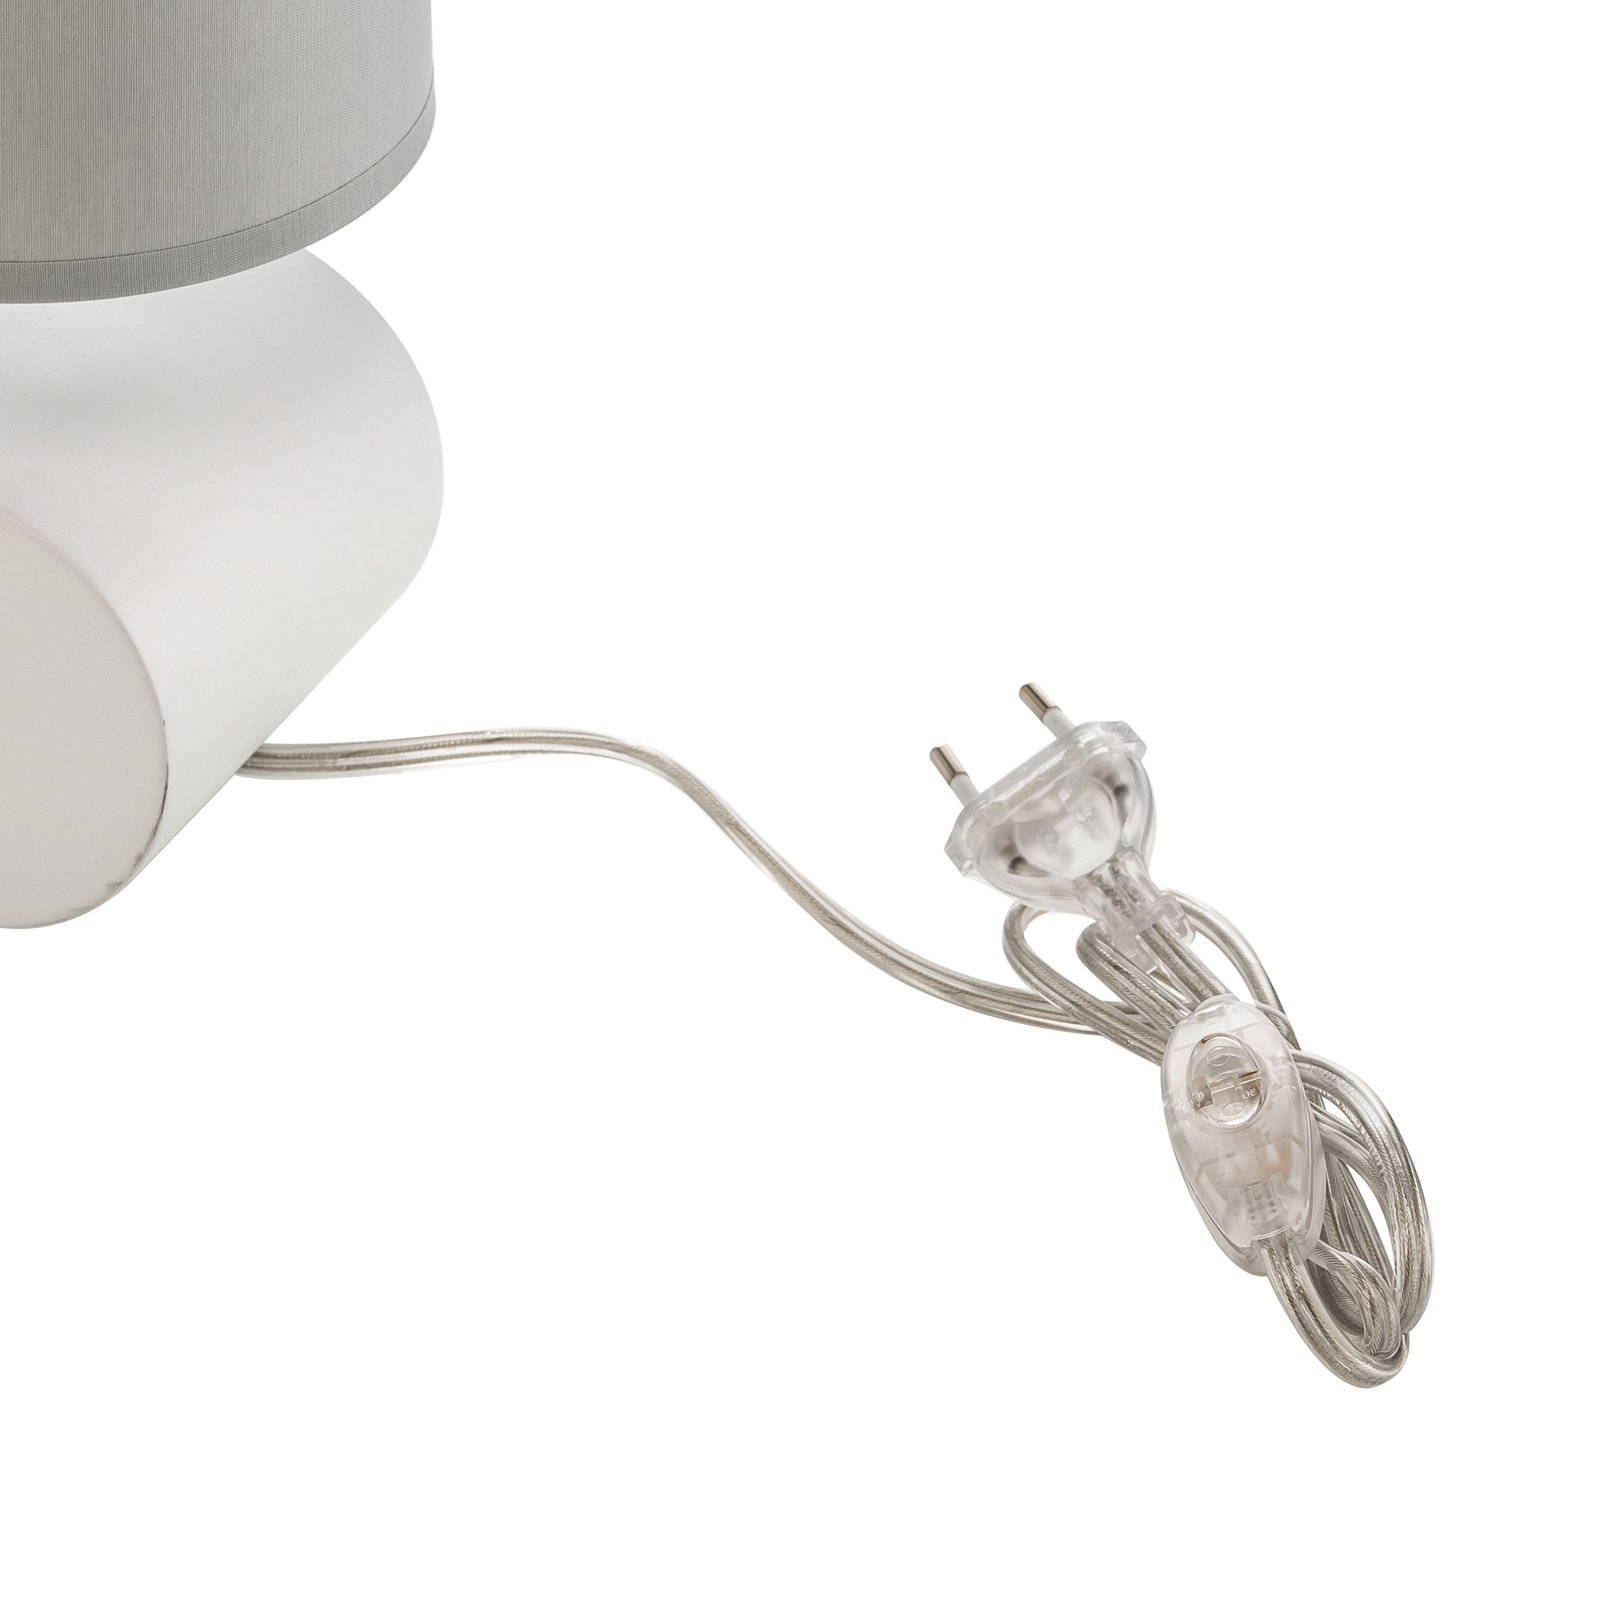 Lampe table Cassy pied blanc, abat-jour tissu gris